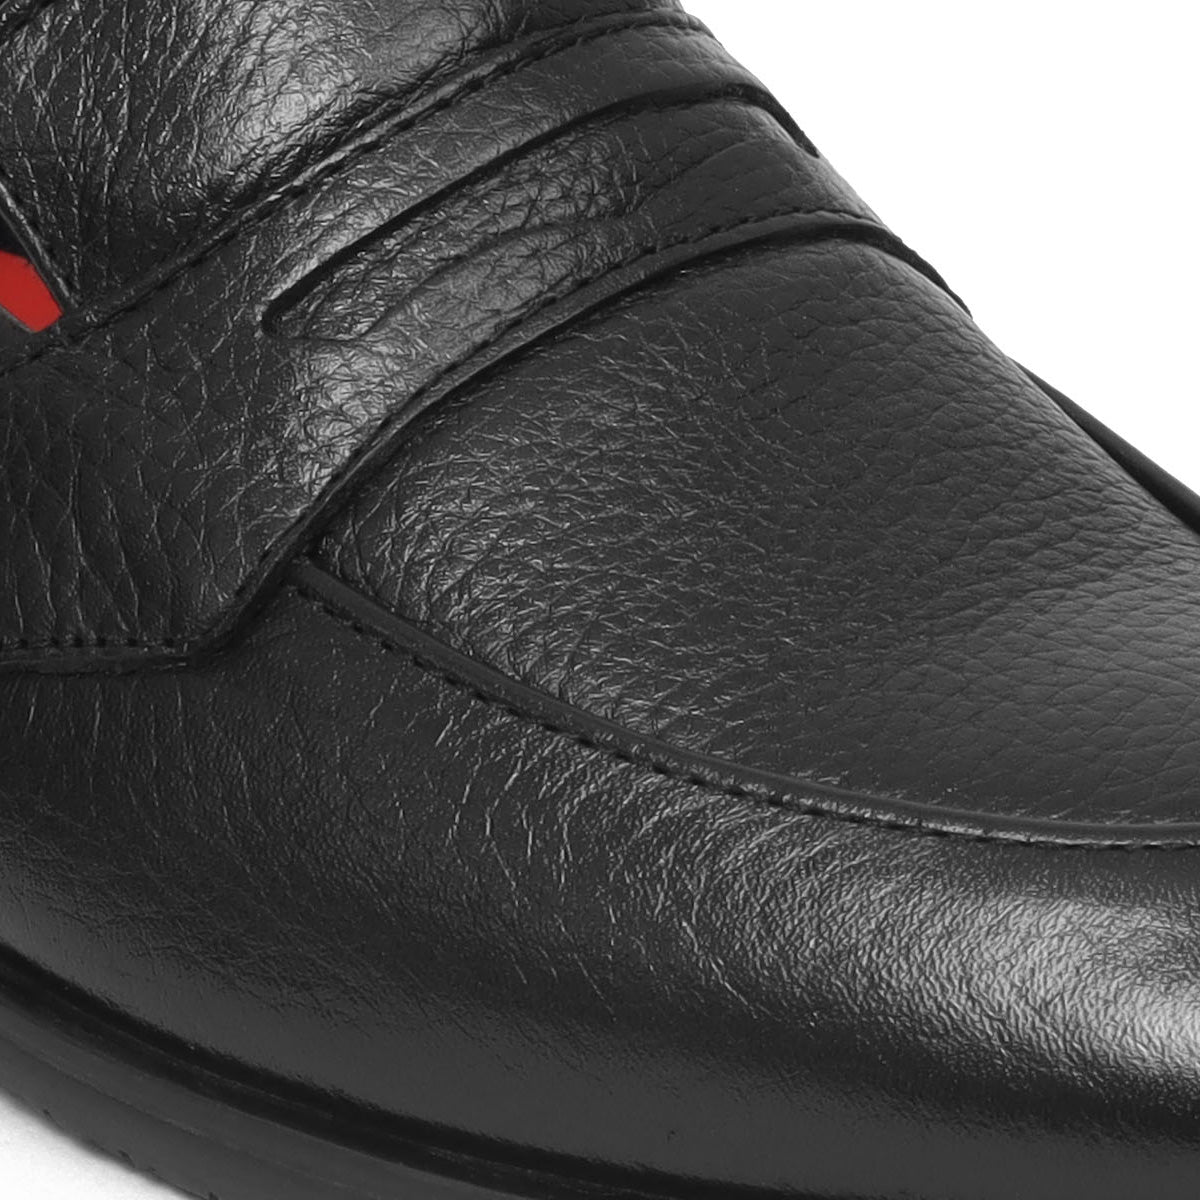 Formal Leather Shoes for Men BL-33